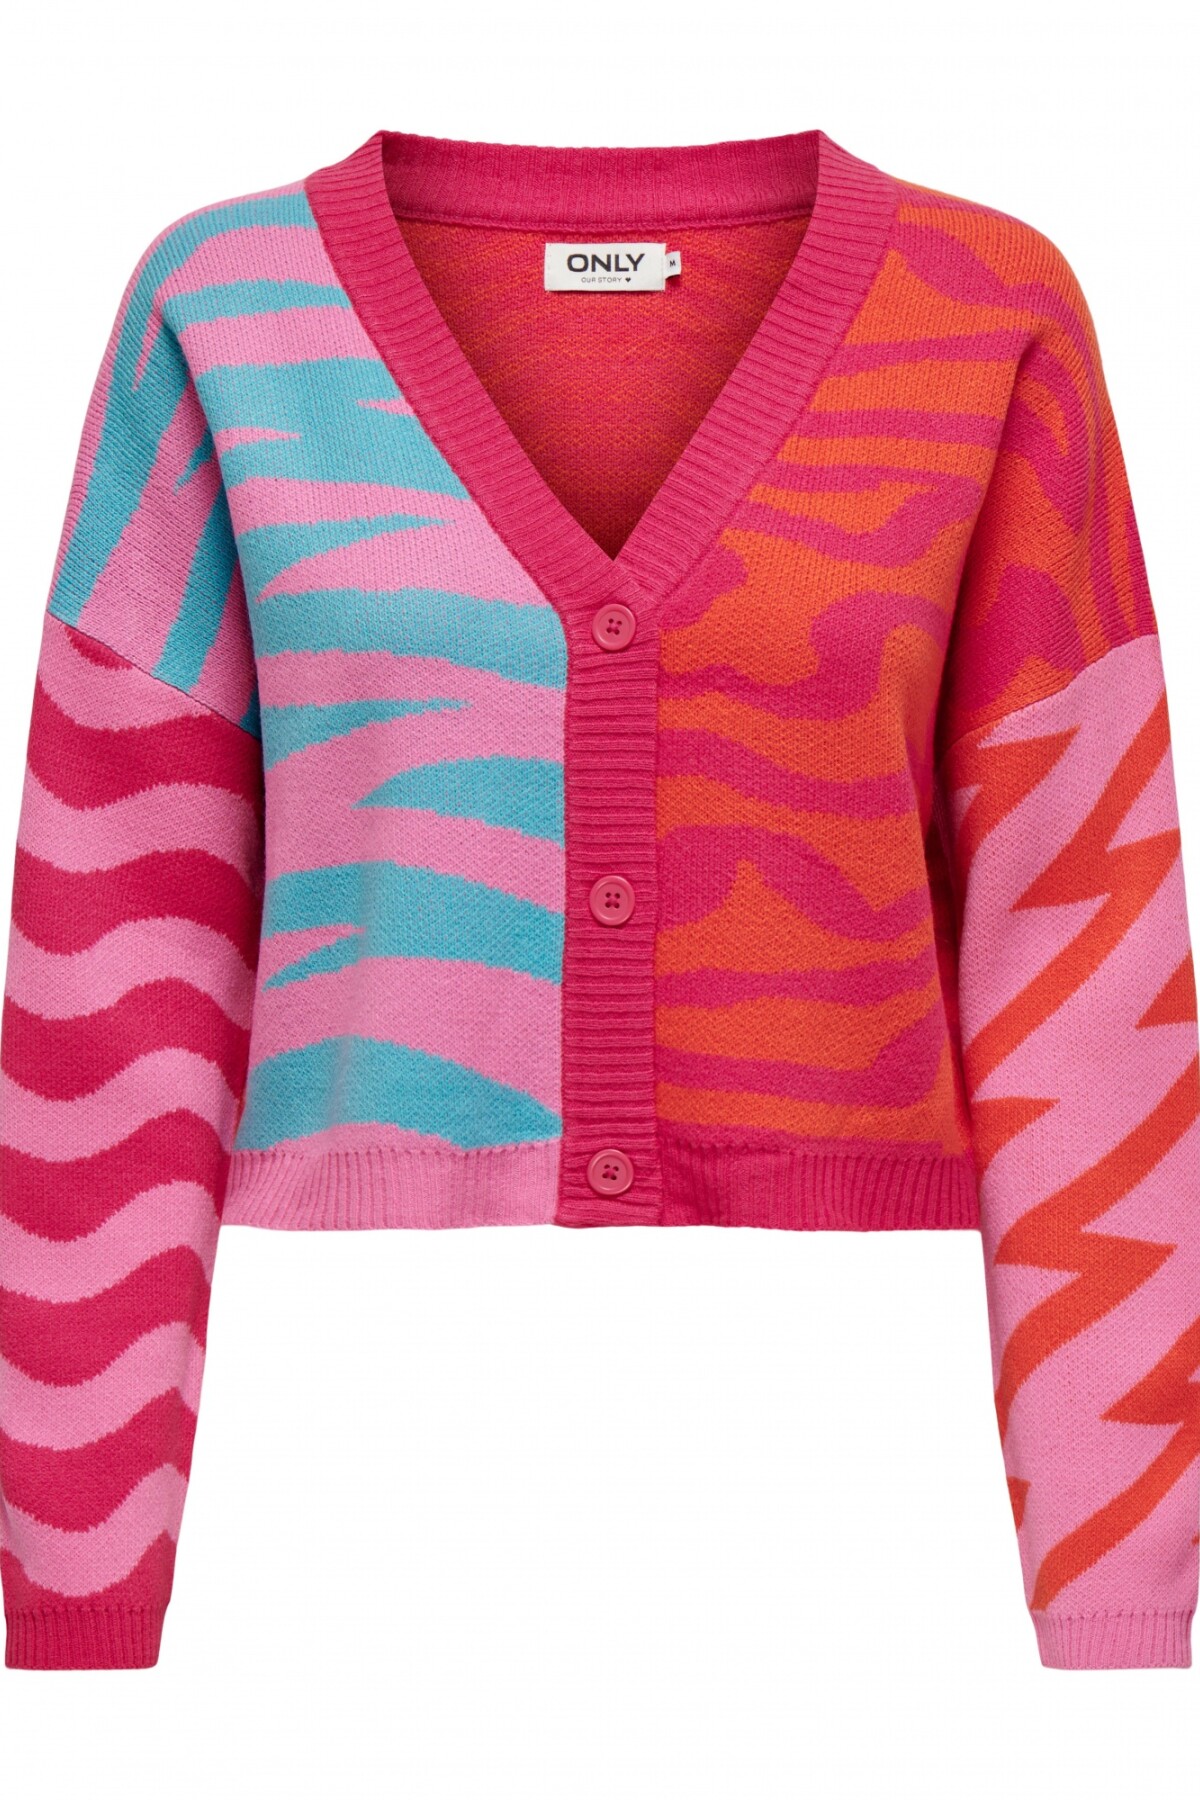 Sweater Dora Pink Cosmos